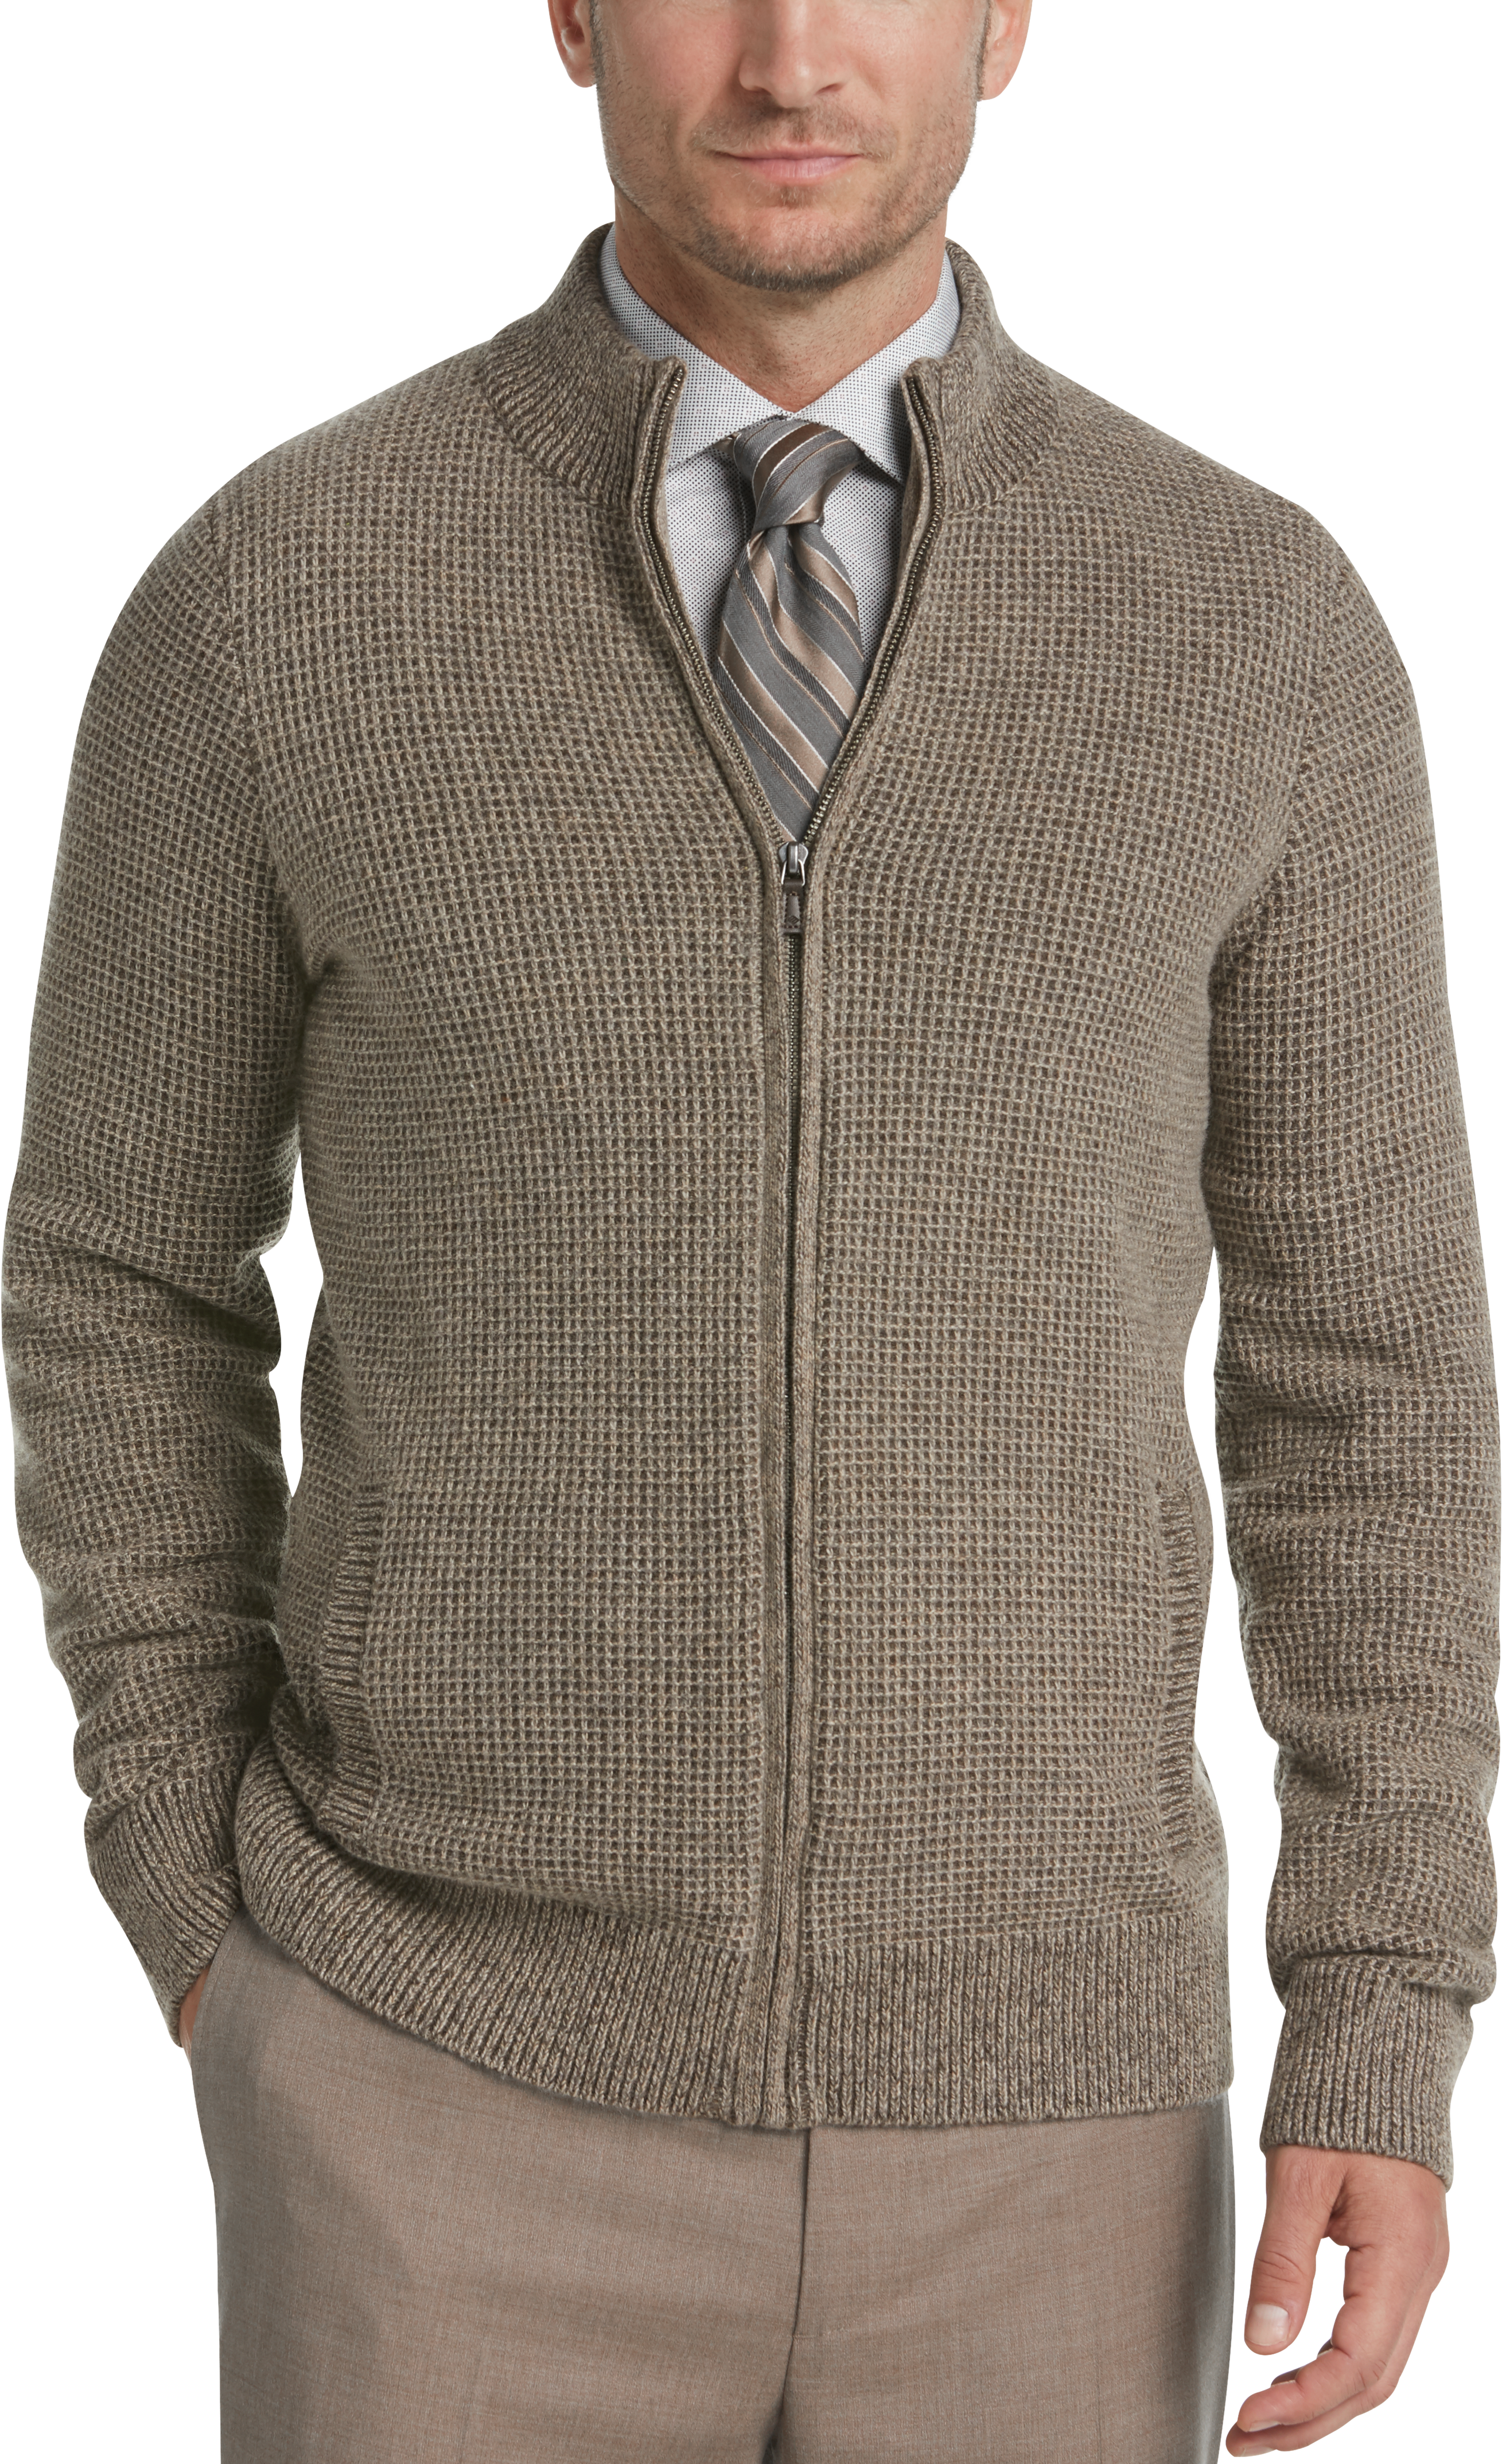 Joseph Abboud Tan Full Zip Cardigan Sweater - Men's Full Zip | Men's ...